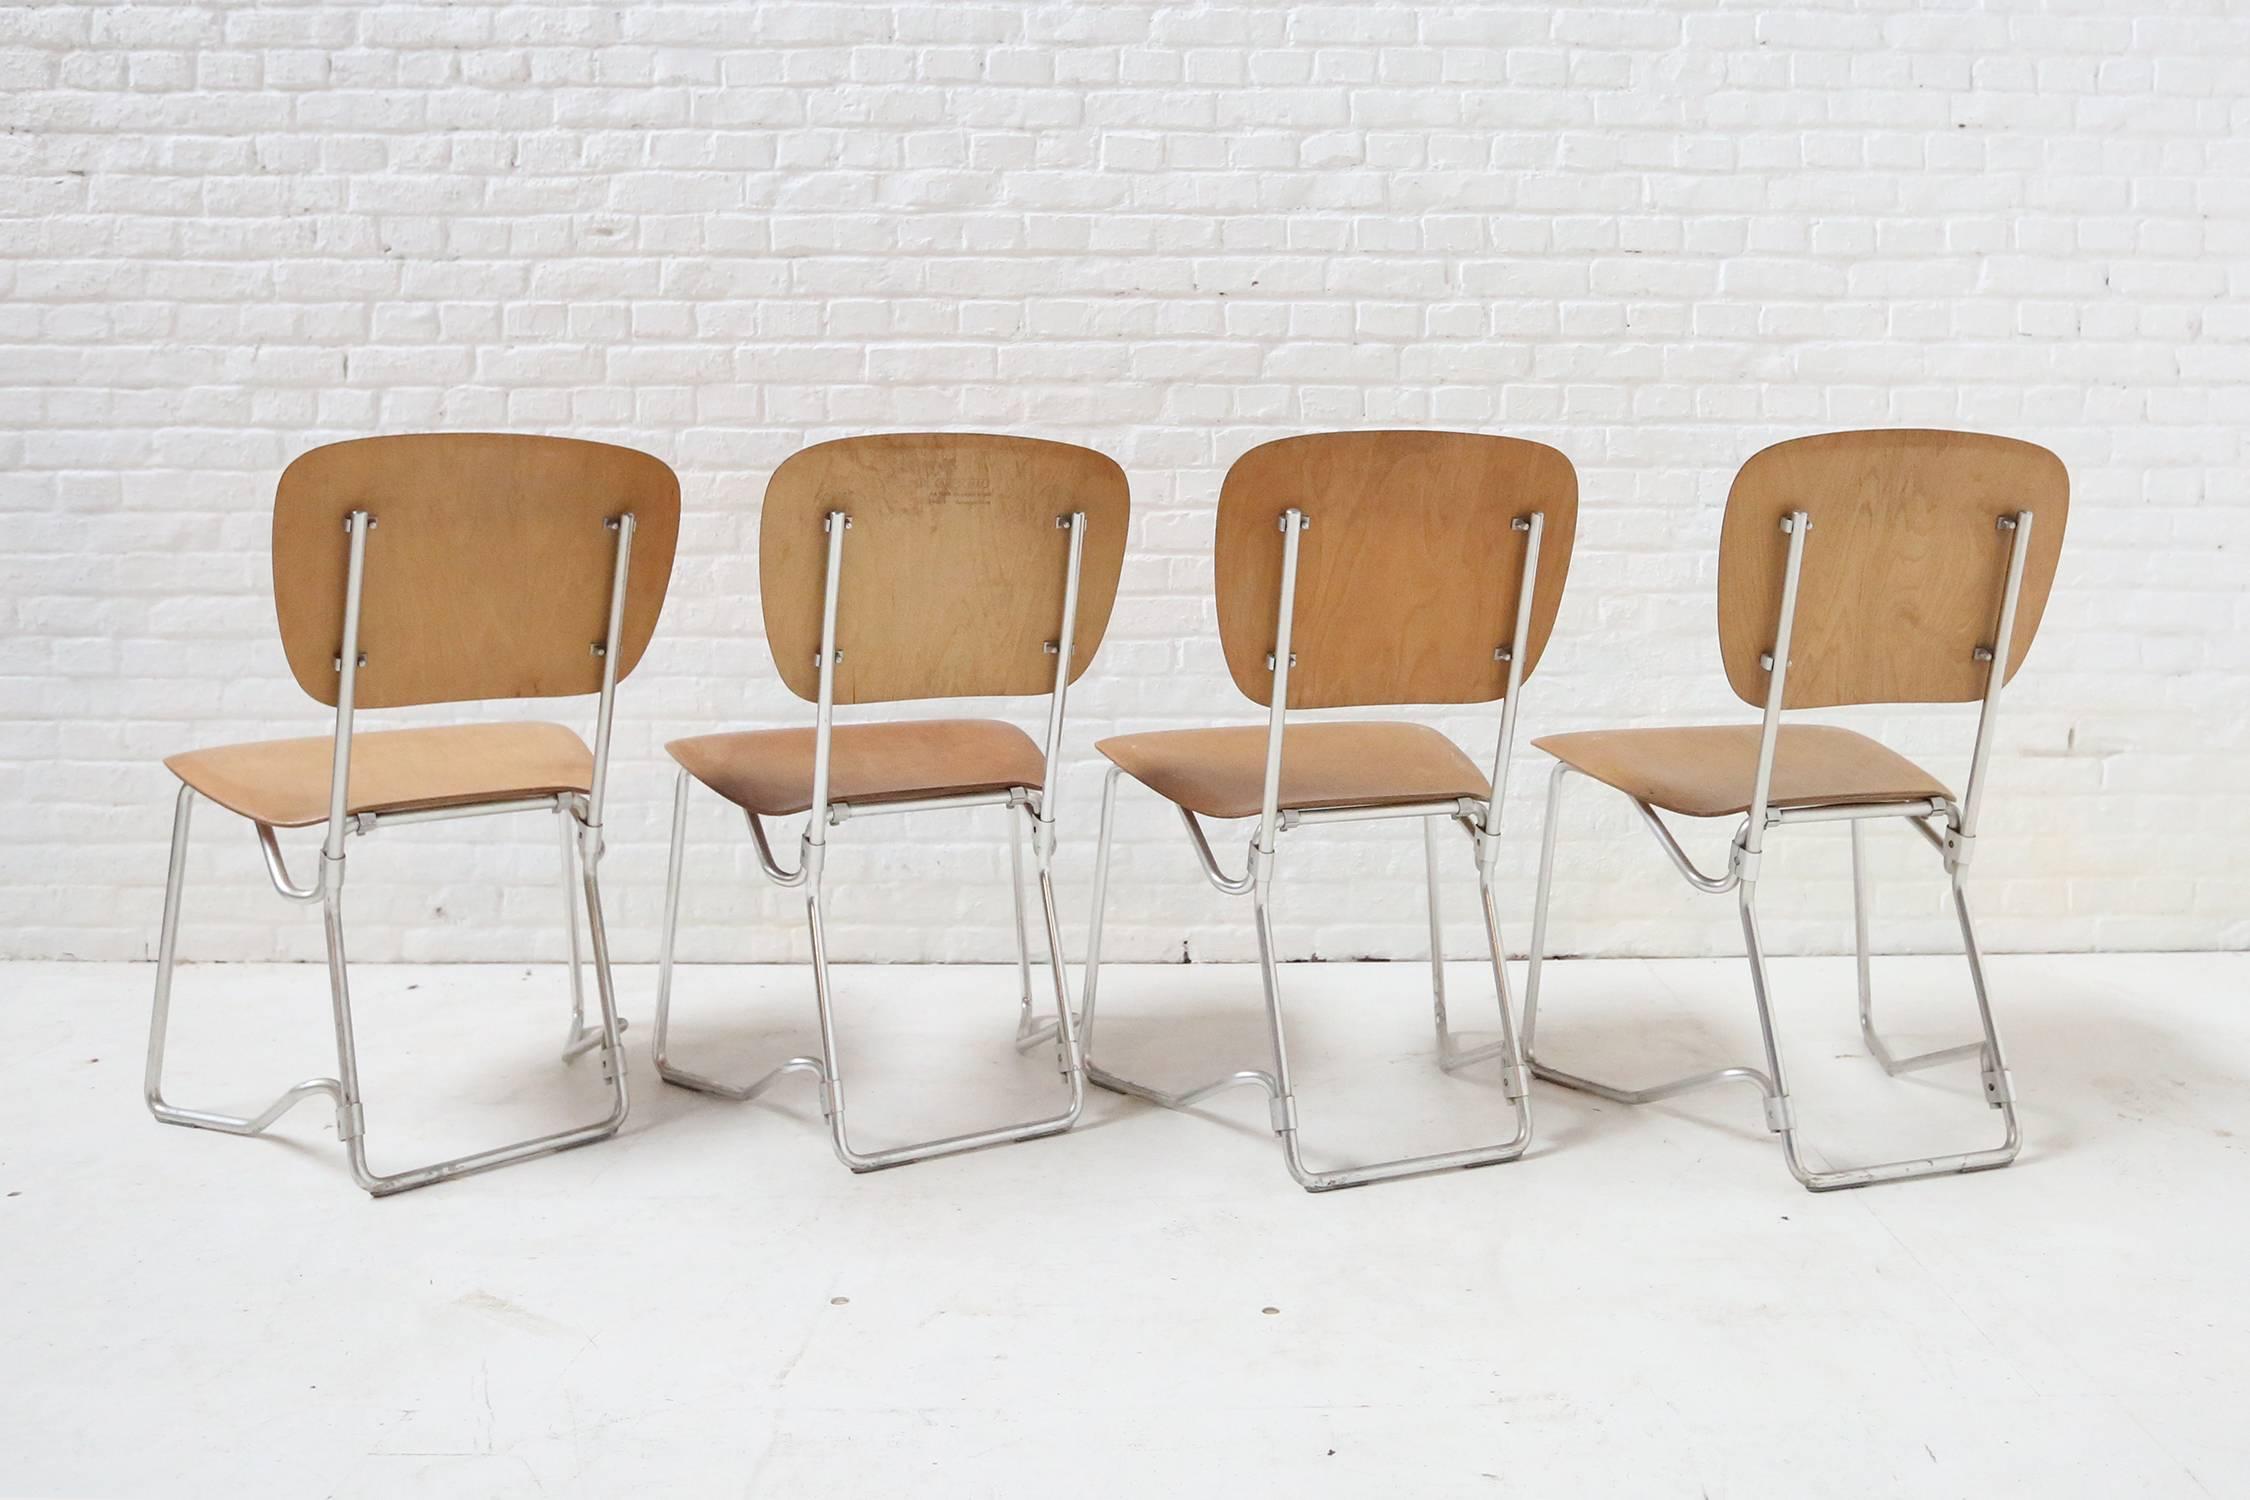 Mid-Century Modern First Edition Aluflex Chairs by Armin Wirth Switzerland, 1950s For Sale